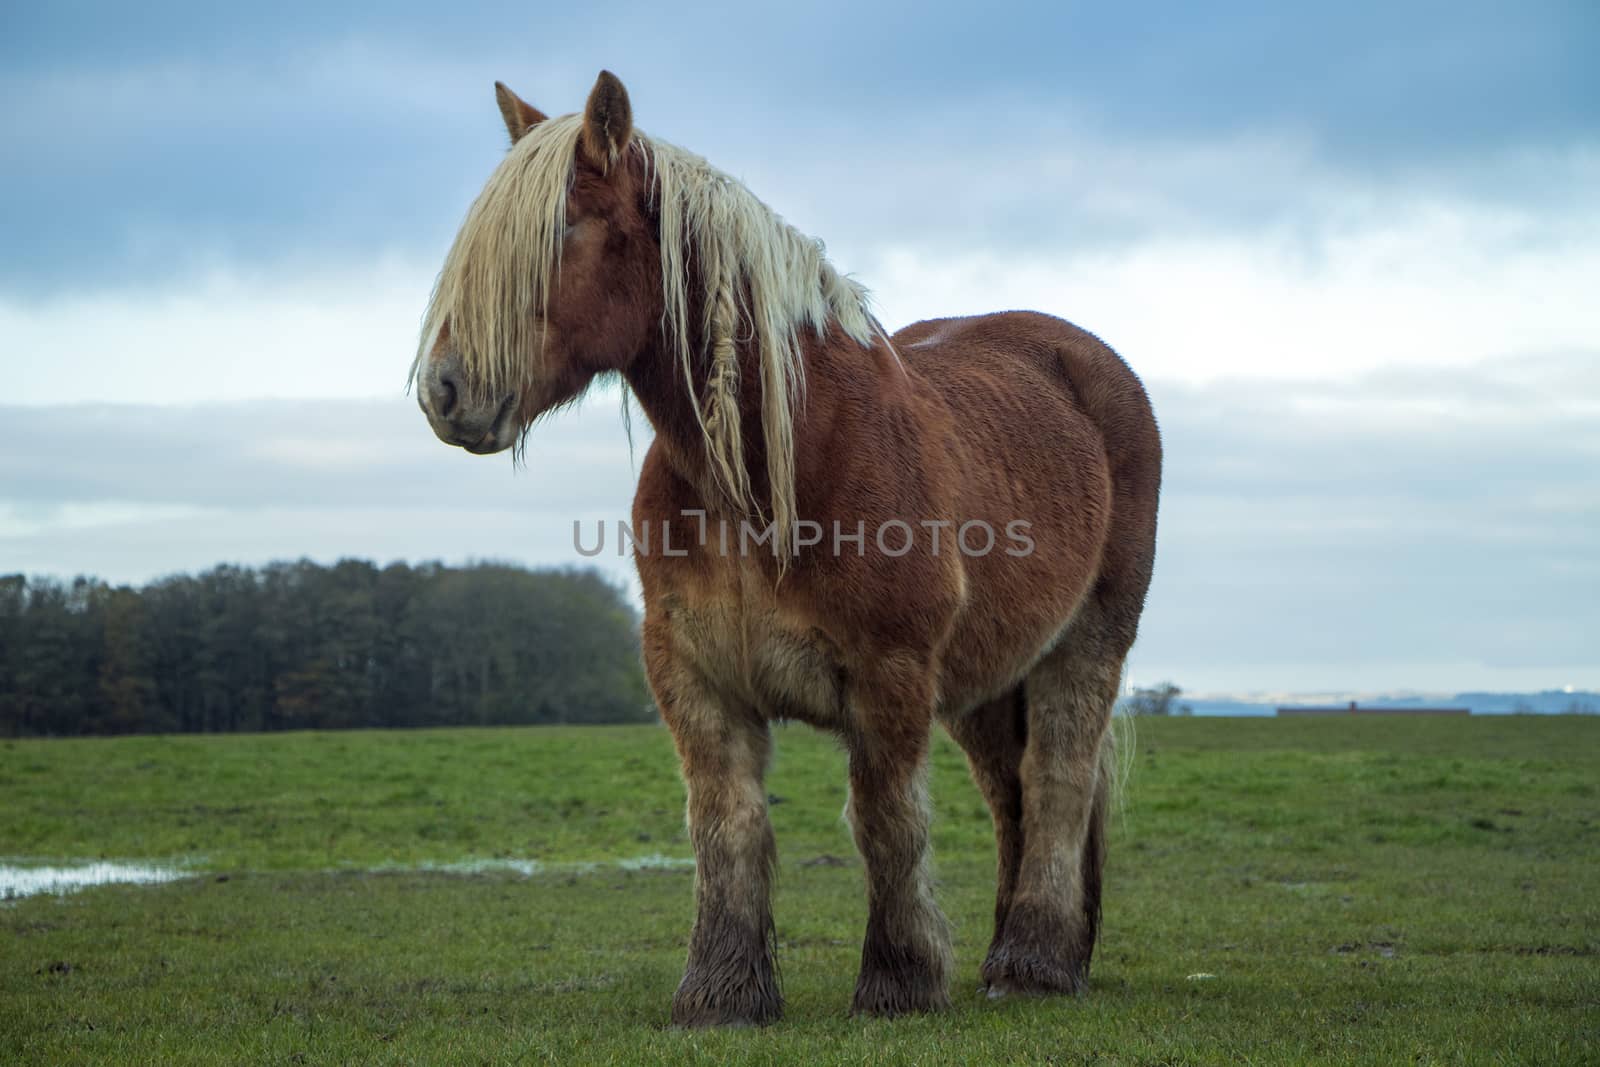 Jutland horse standing on green field, Equus ferus caballus